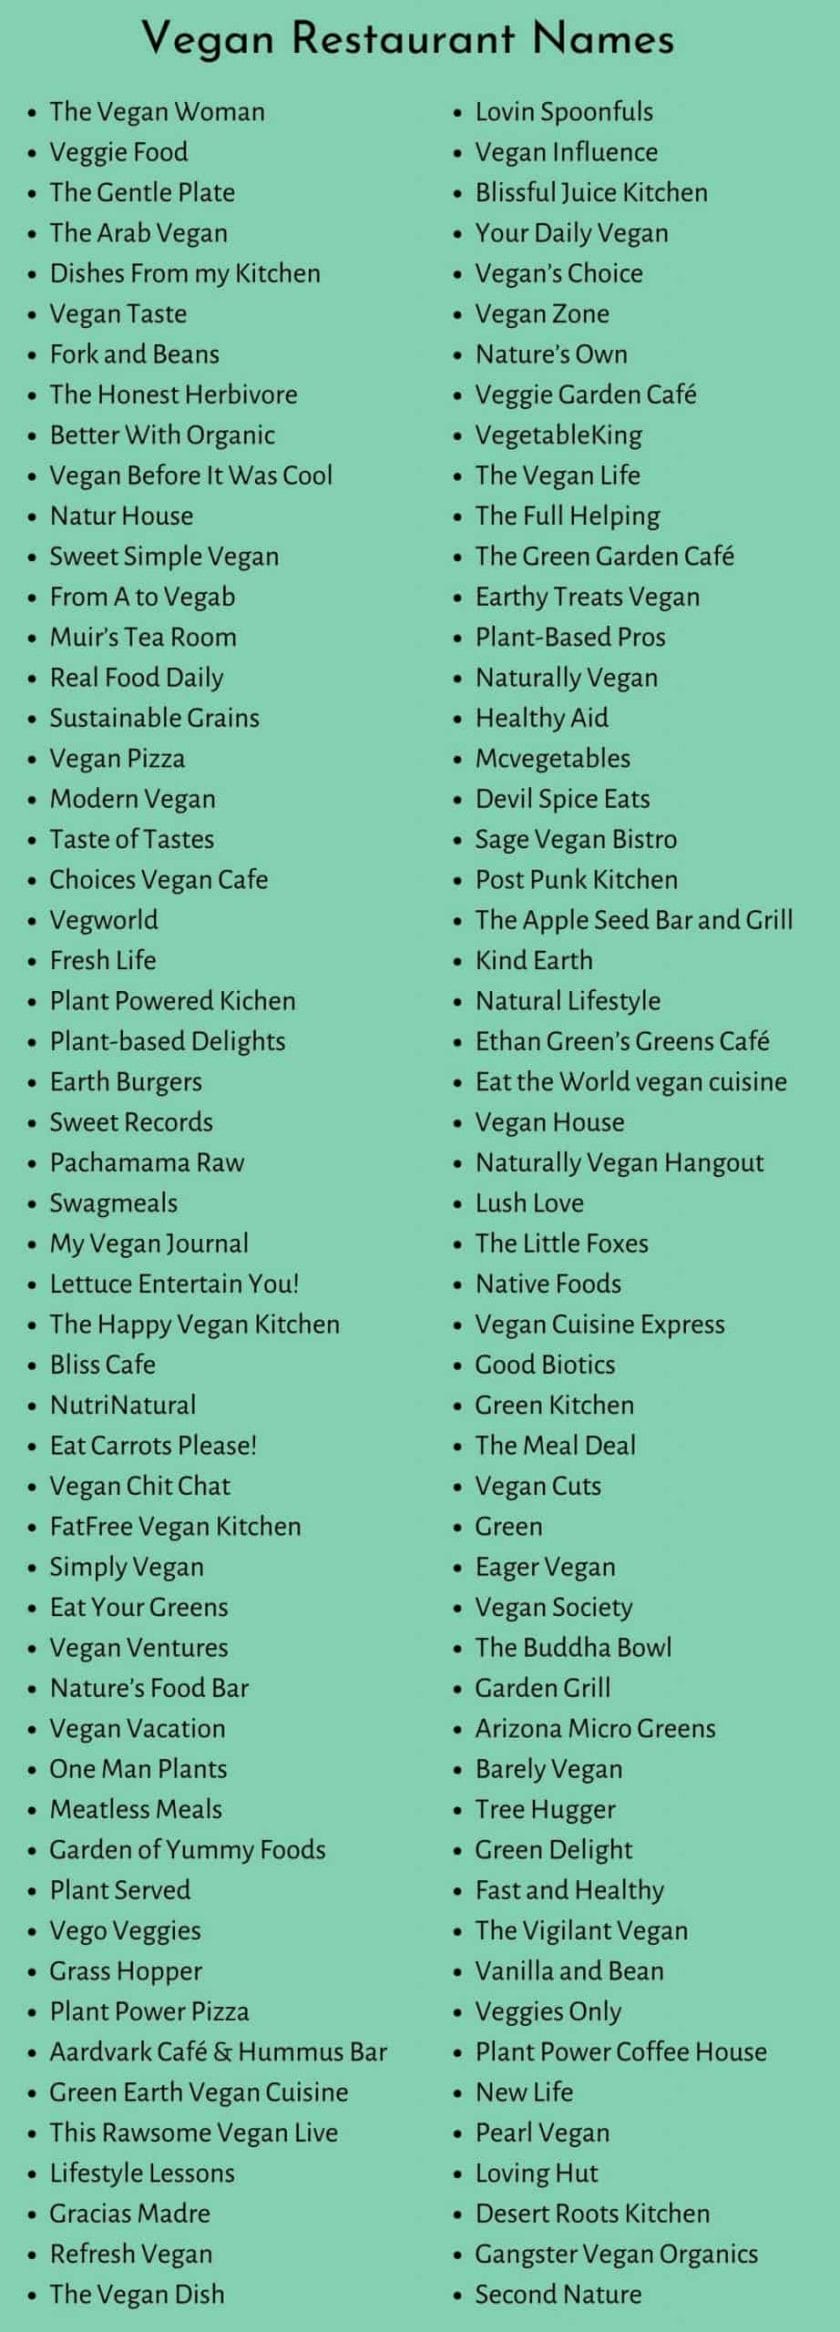 Vegan Restaurant Names